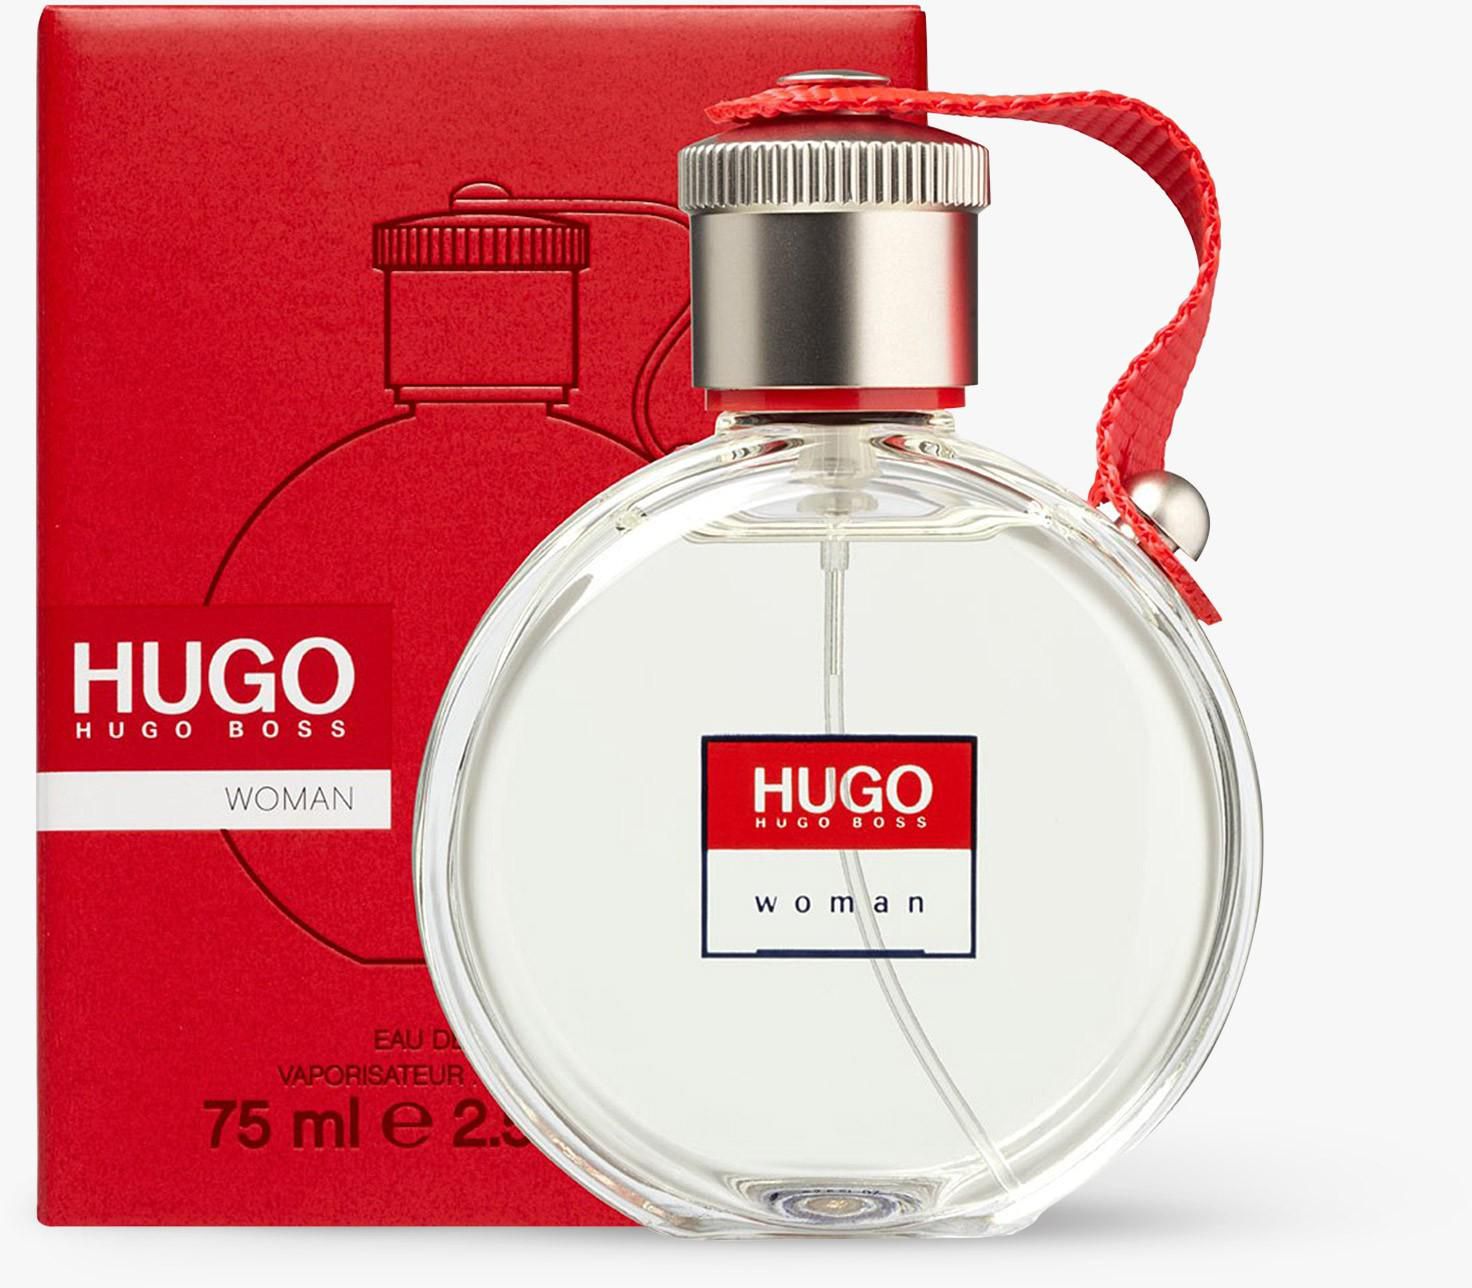 Hugo для женщин. Hugo Boss woman 50 ml. Hugo Boss Hugo woman 75 мл. Hugo Boss Hugo woman EDP (50 мл). Boss Hugo woman 50ml EDP красный.